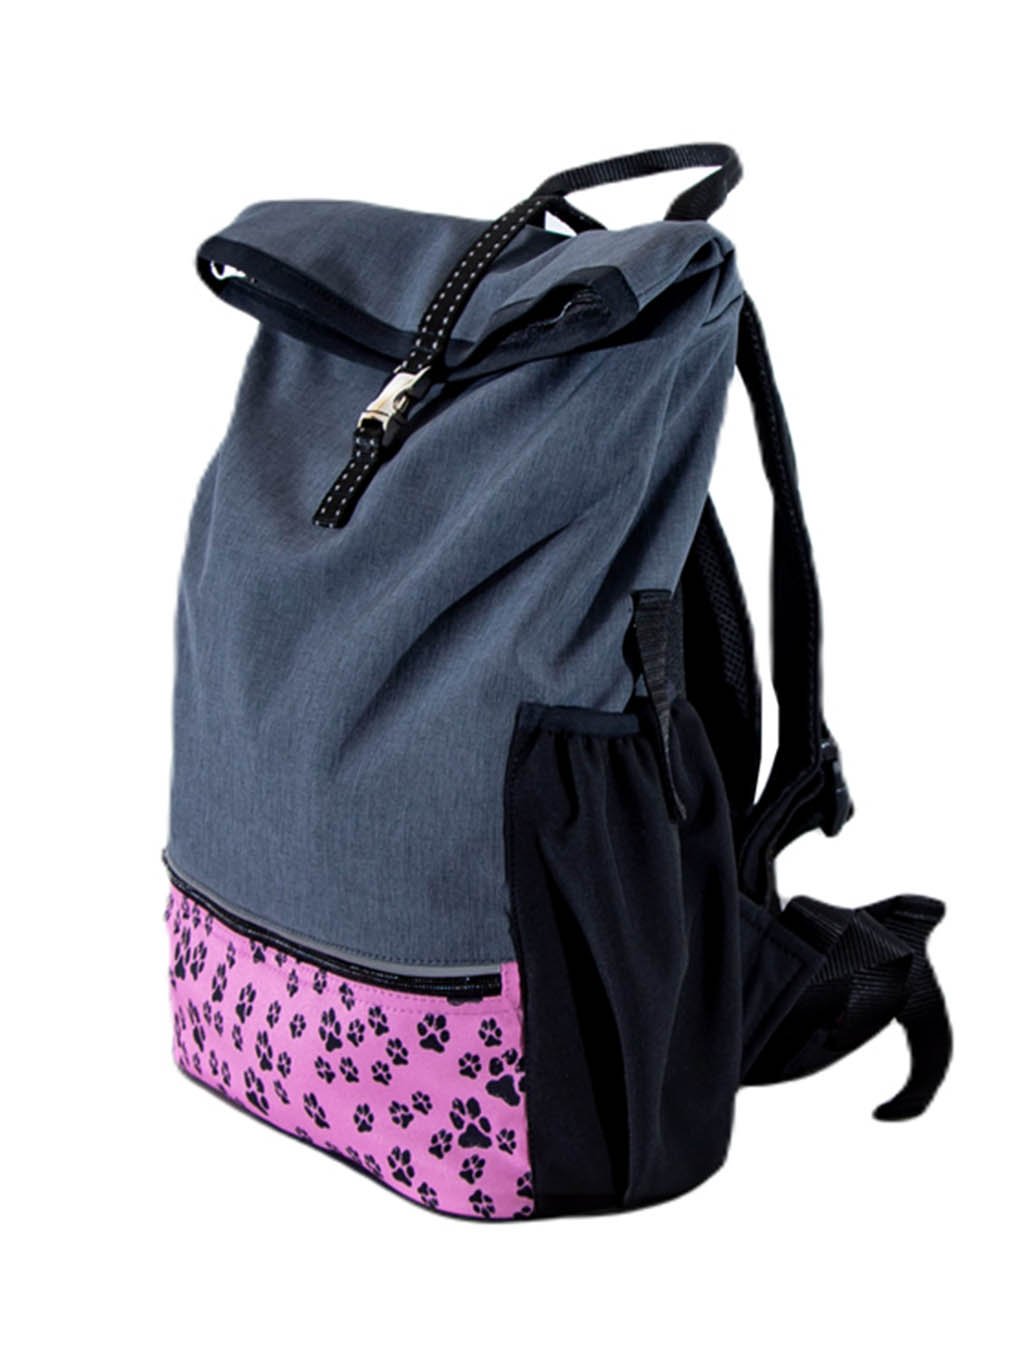 LEVANDULE training backpack with top zipper closure 4dox